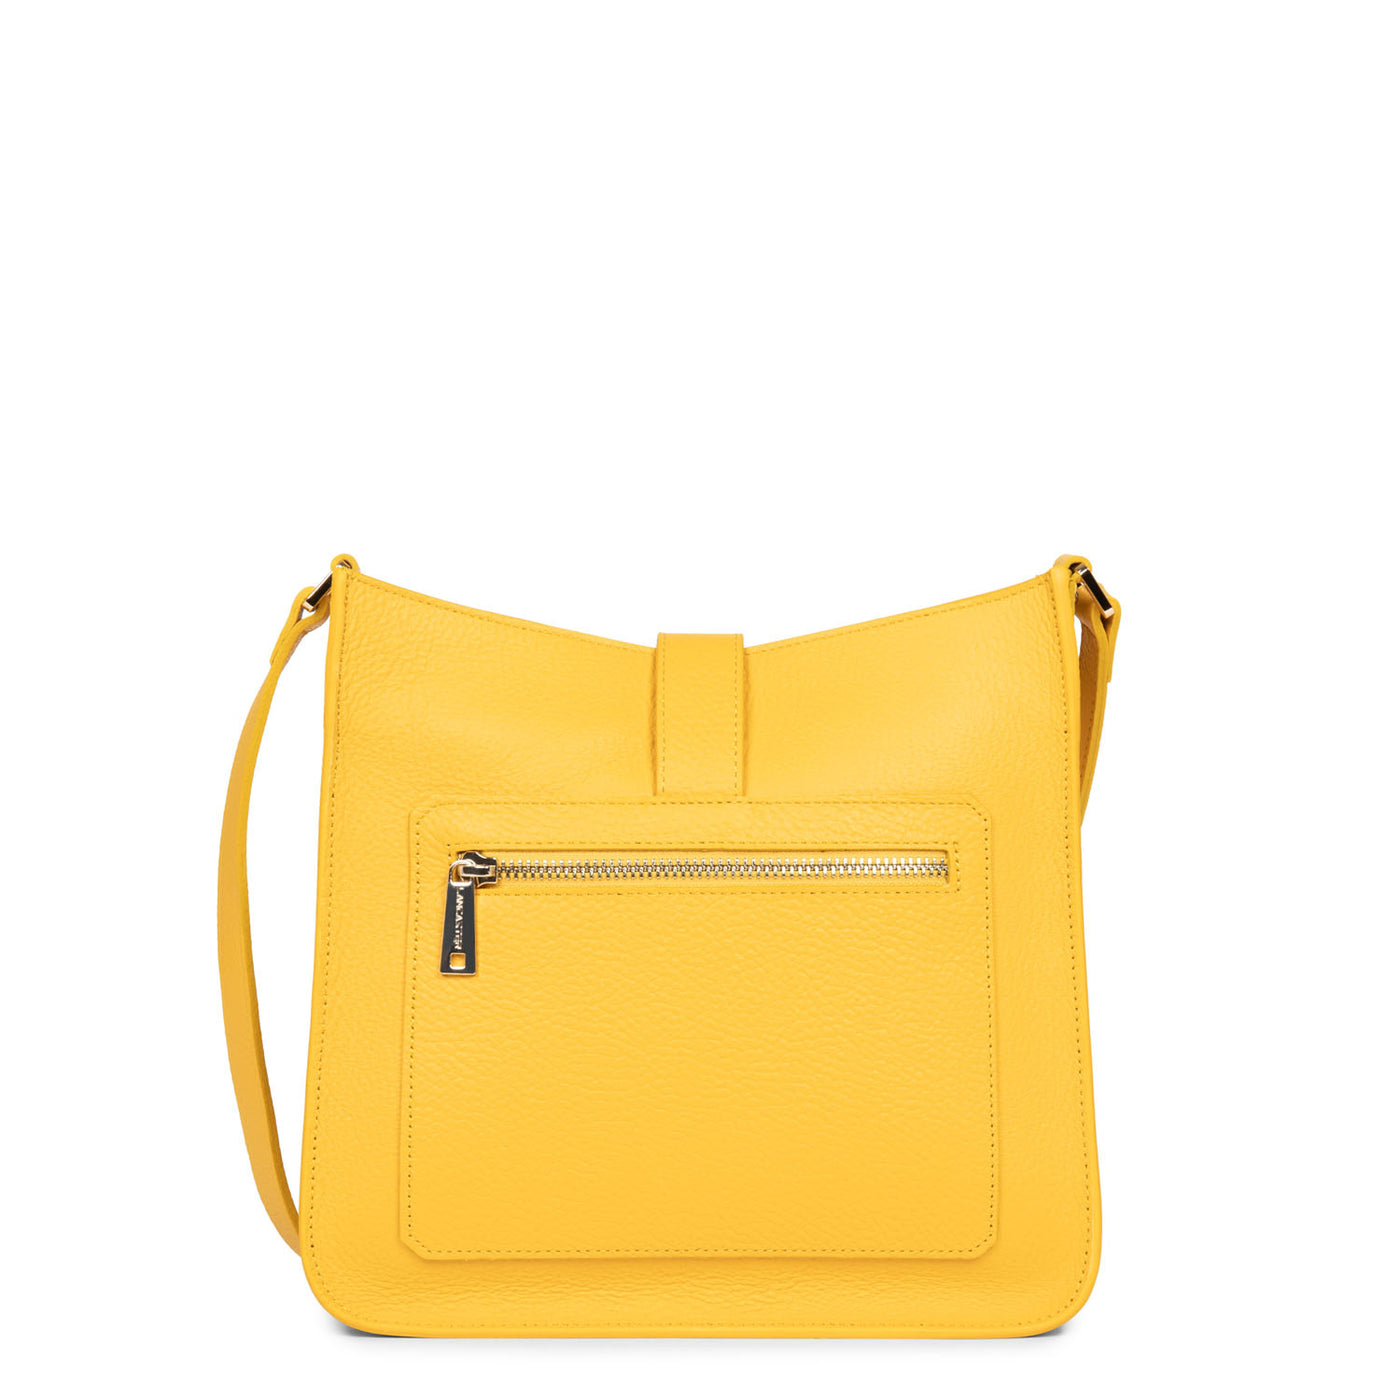 sac trotteur - foulonné double hook #couleur_jaune-in-or